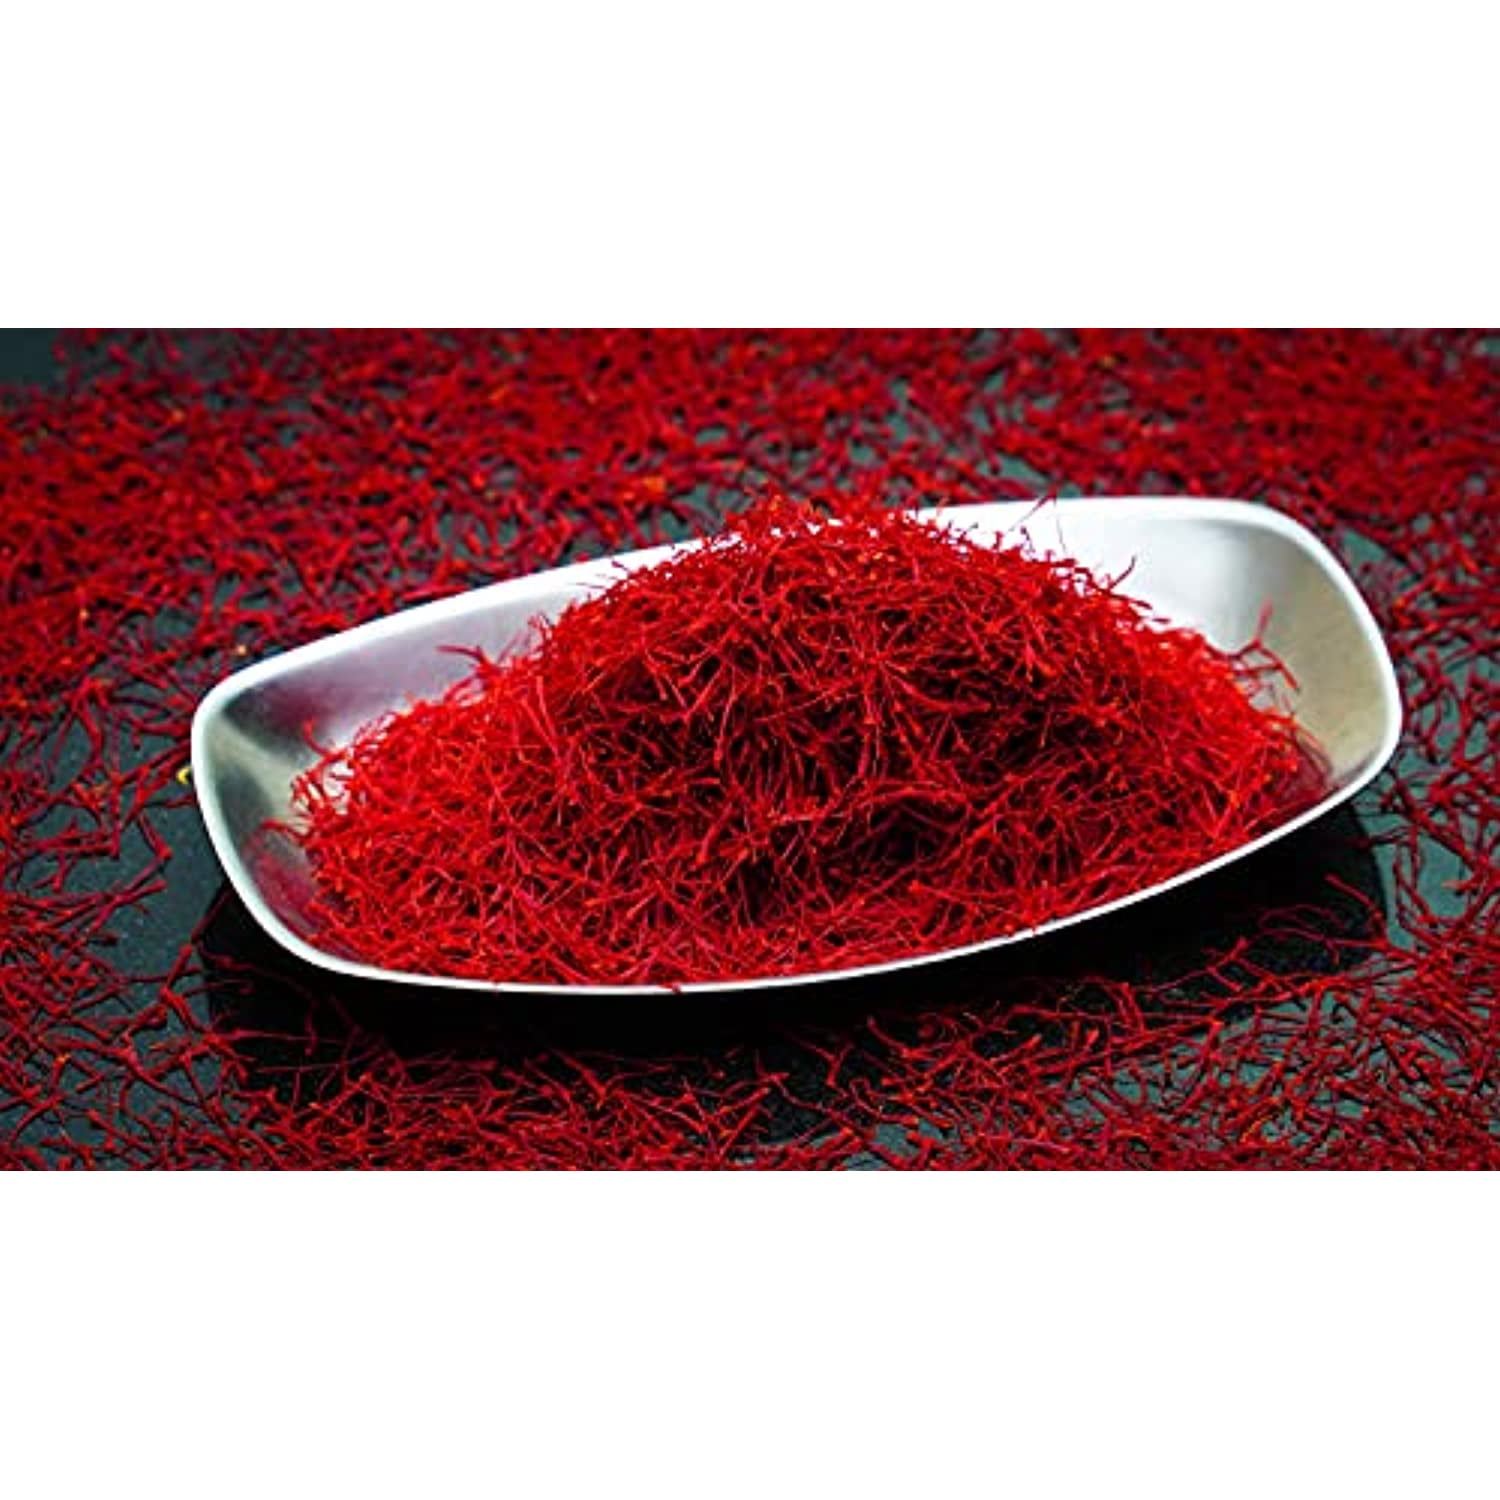 Saffron Threads, Finest Pure Premium All Red Organic Saffron Threads, Grade  A+ Super Negin Saffron Spice For Cooking & Tea, 1 Gram 